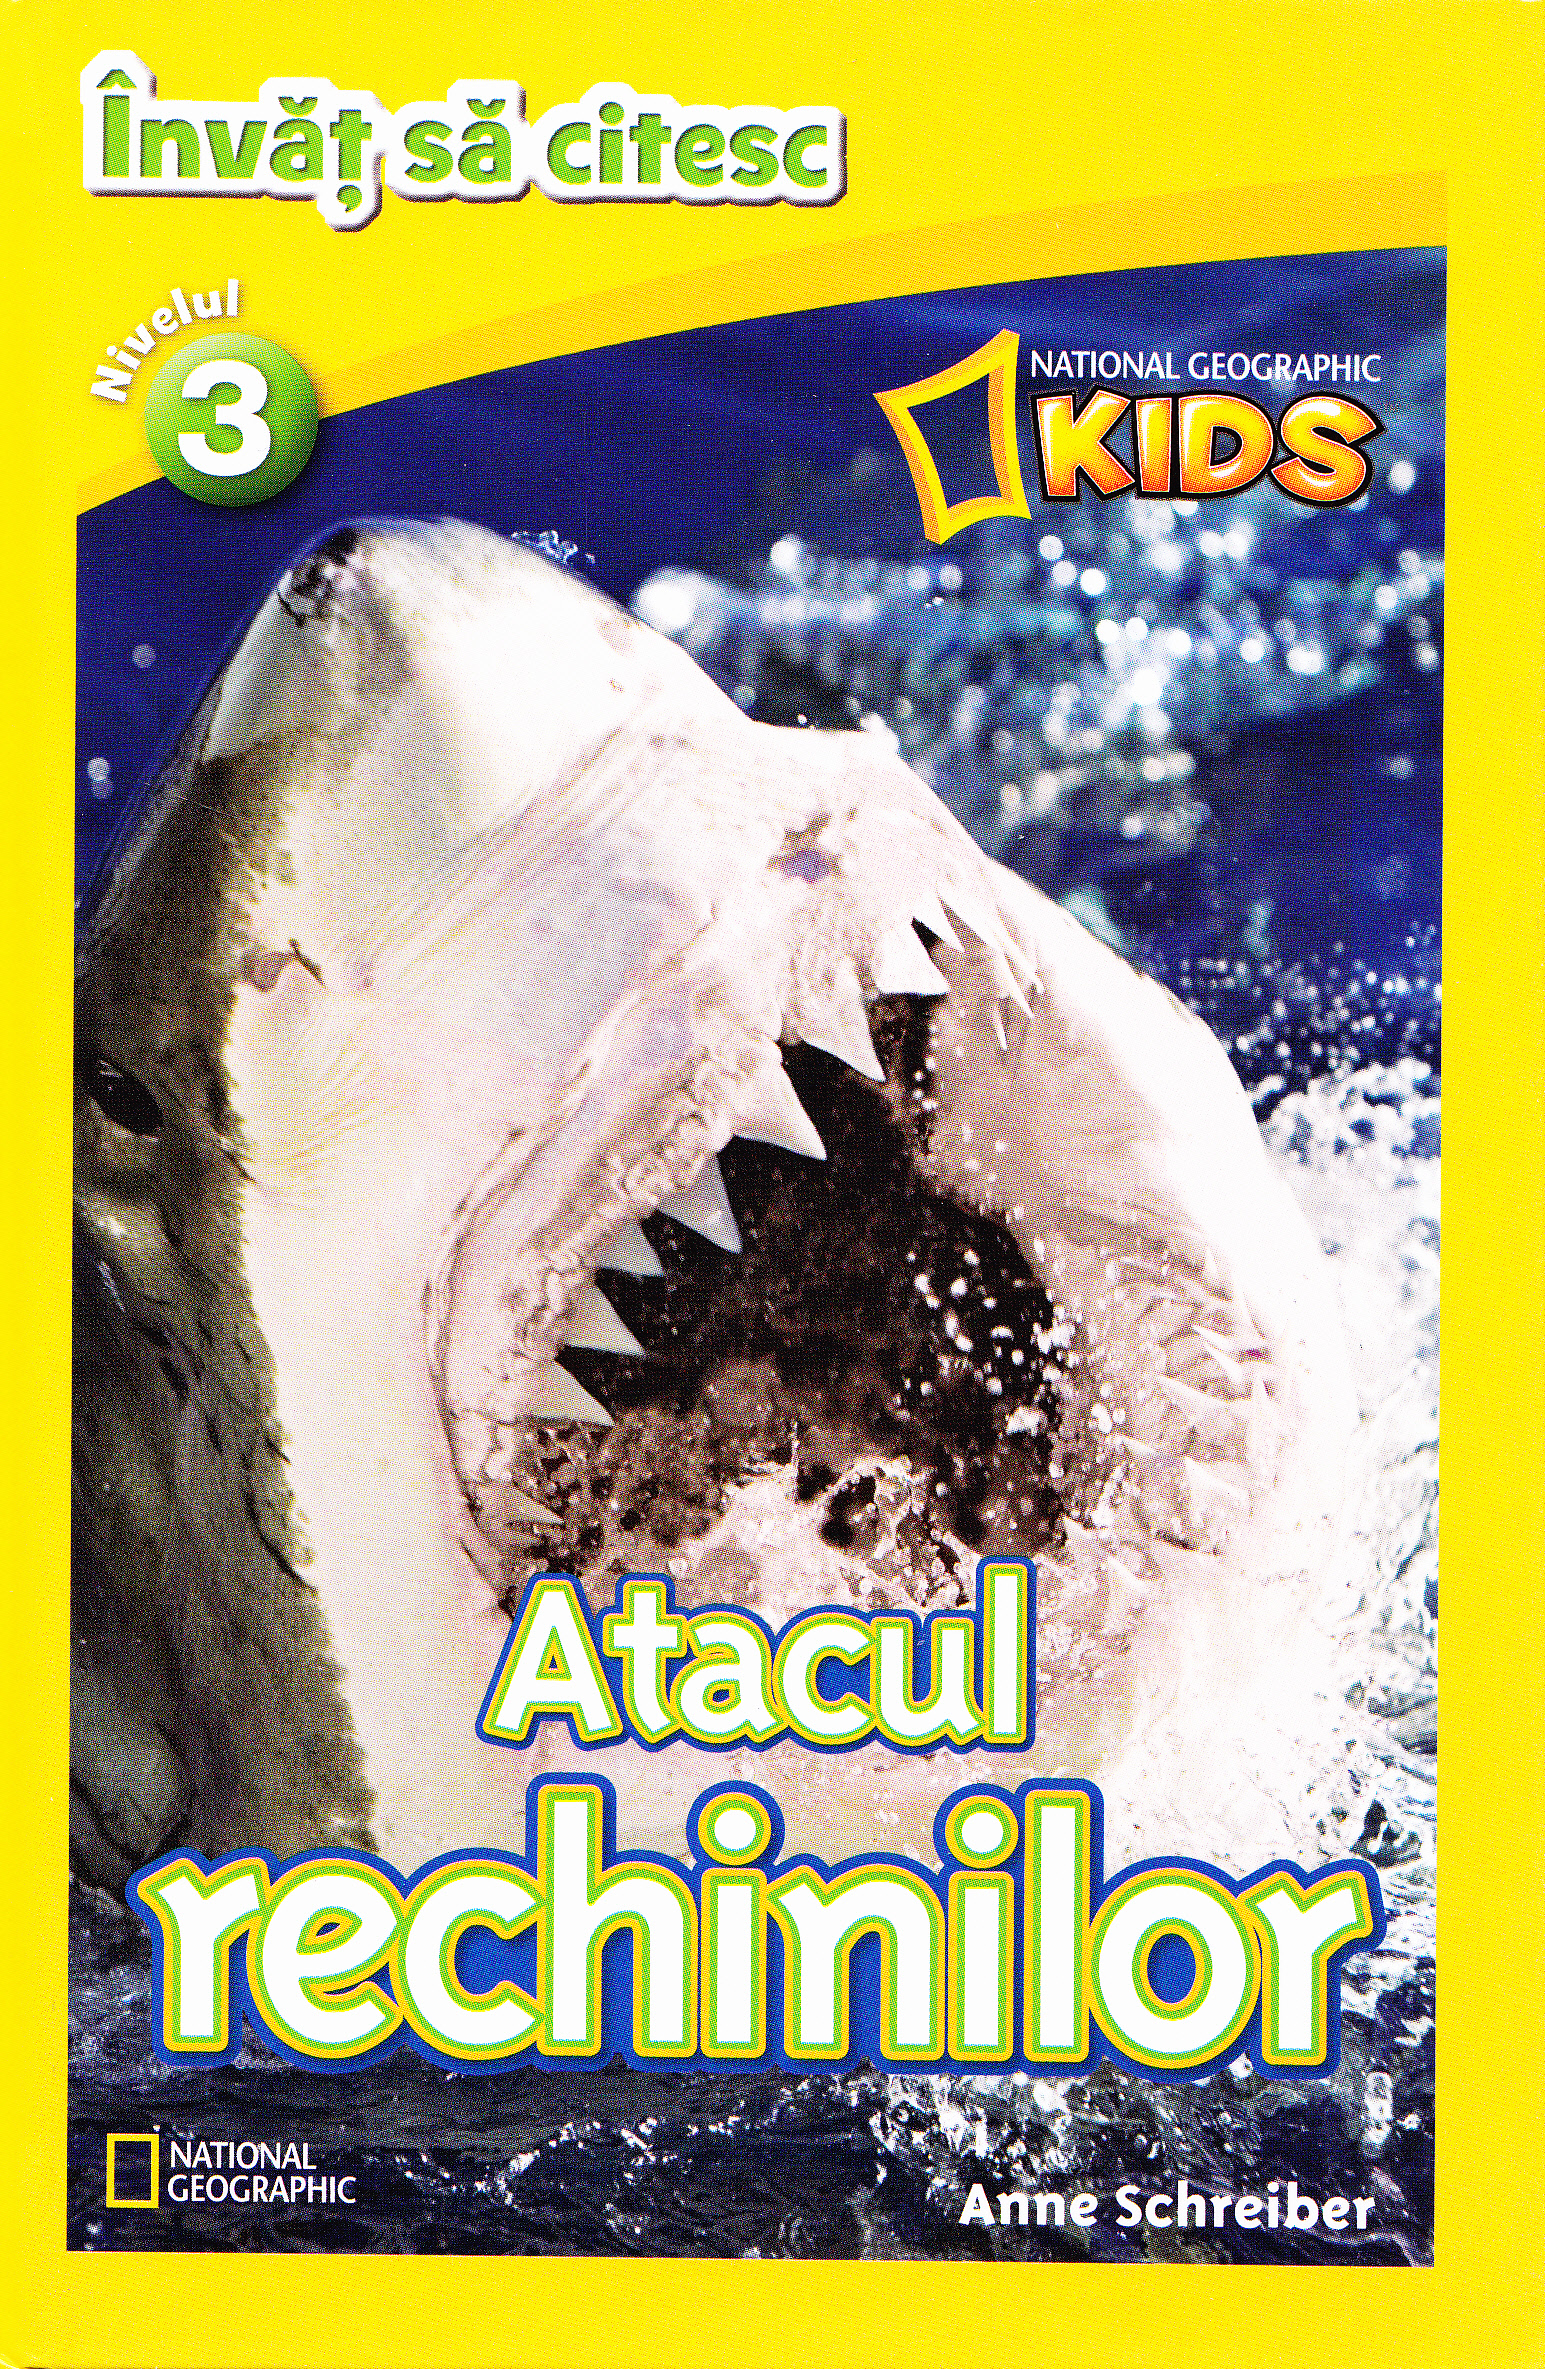 Atacul rechinilor - National Geographic Kids - Invat sa citesc nivelul 3